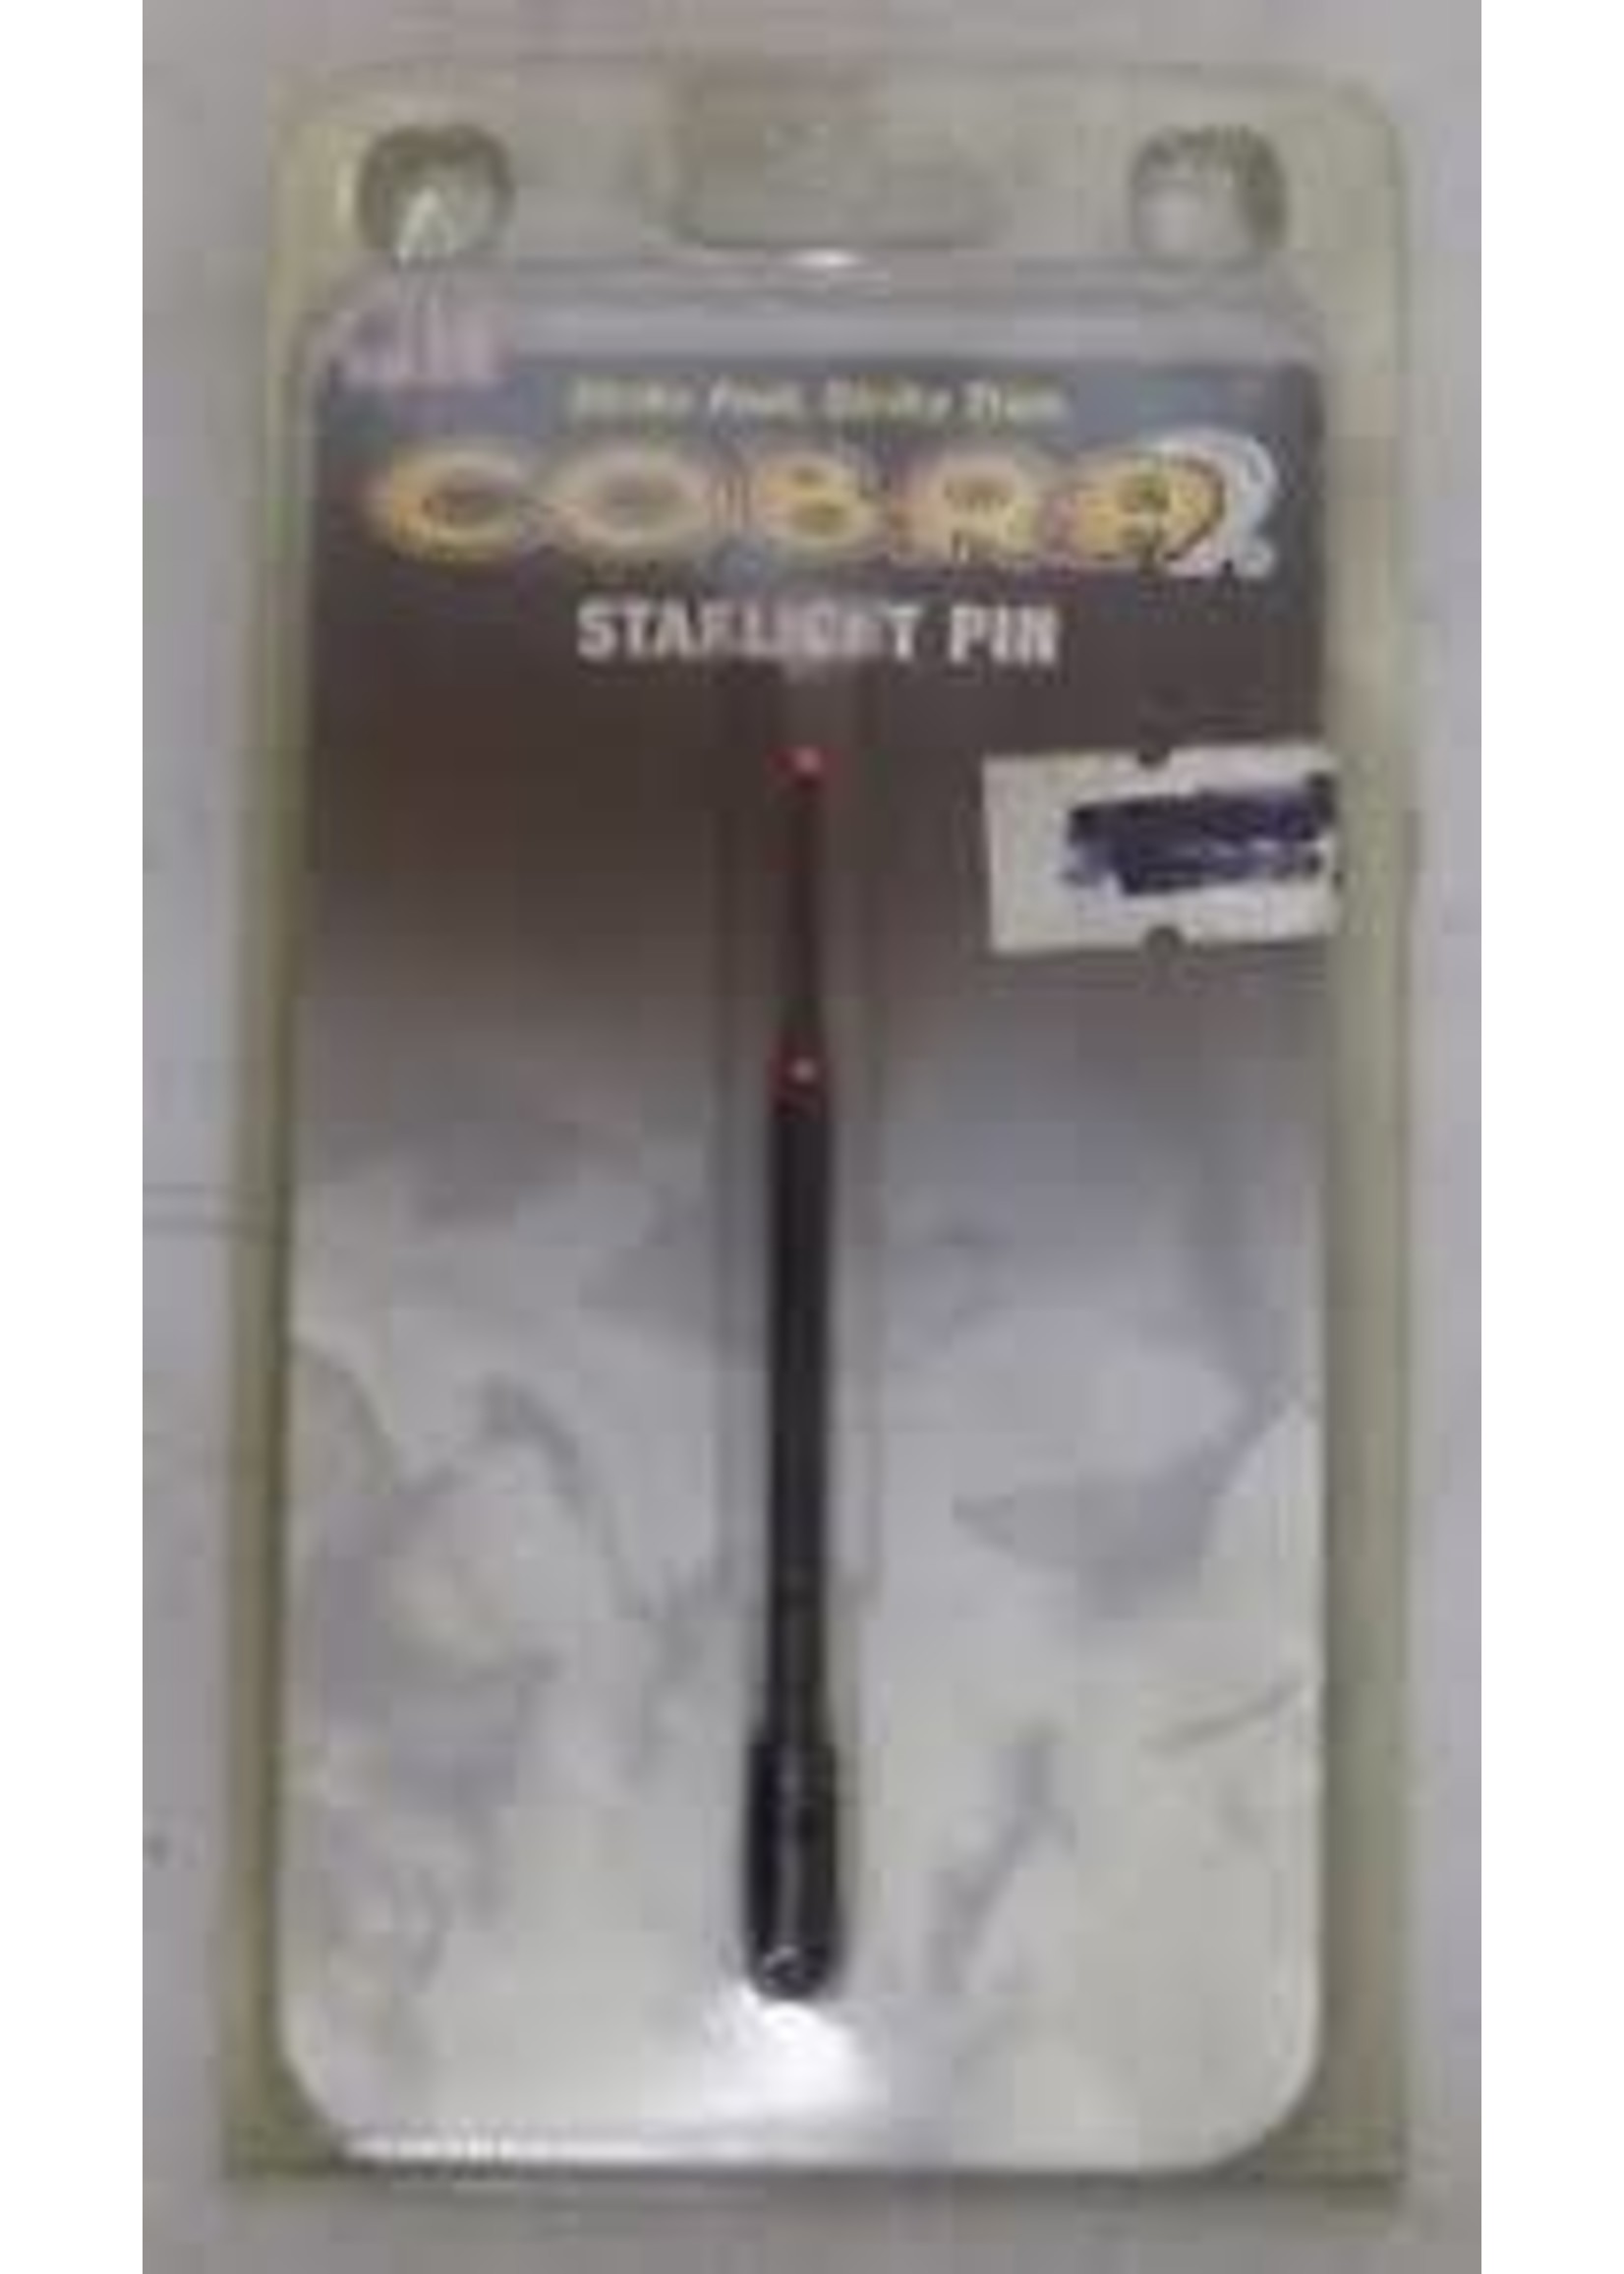 COBRA ARCHERY COBRA SITE PIN WITH LIGHT C-171R